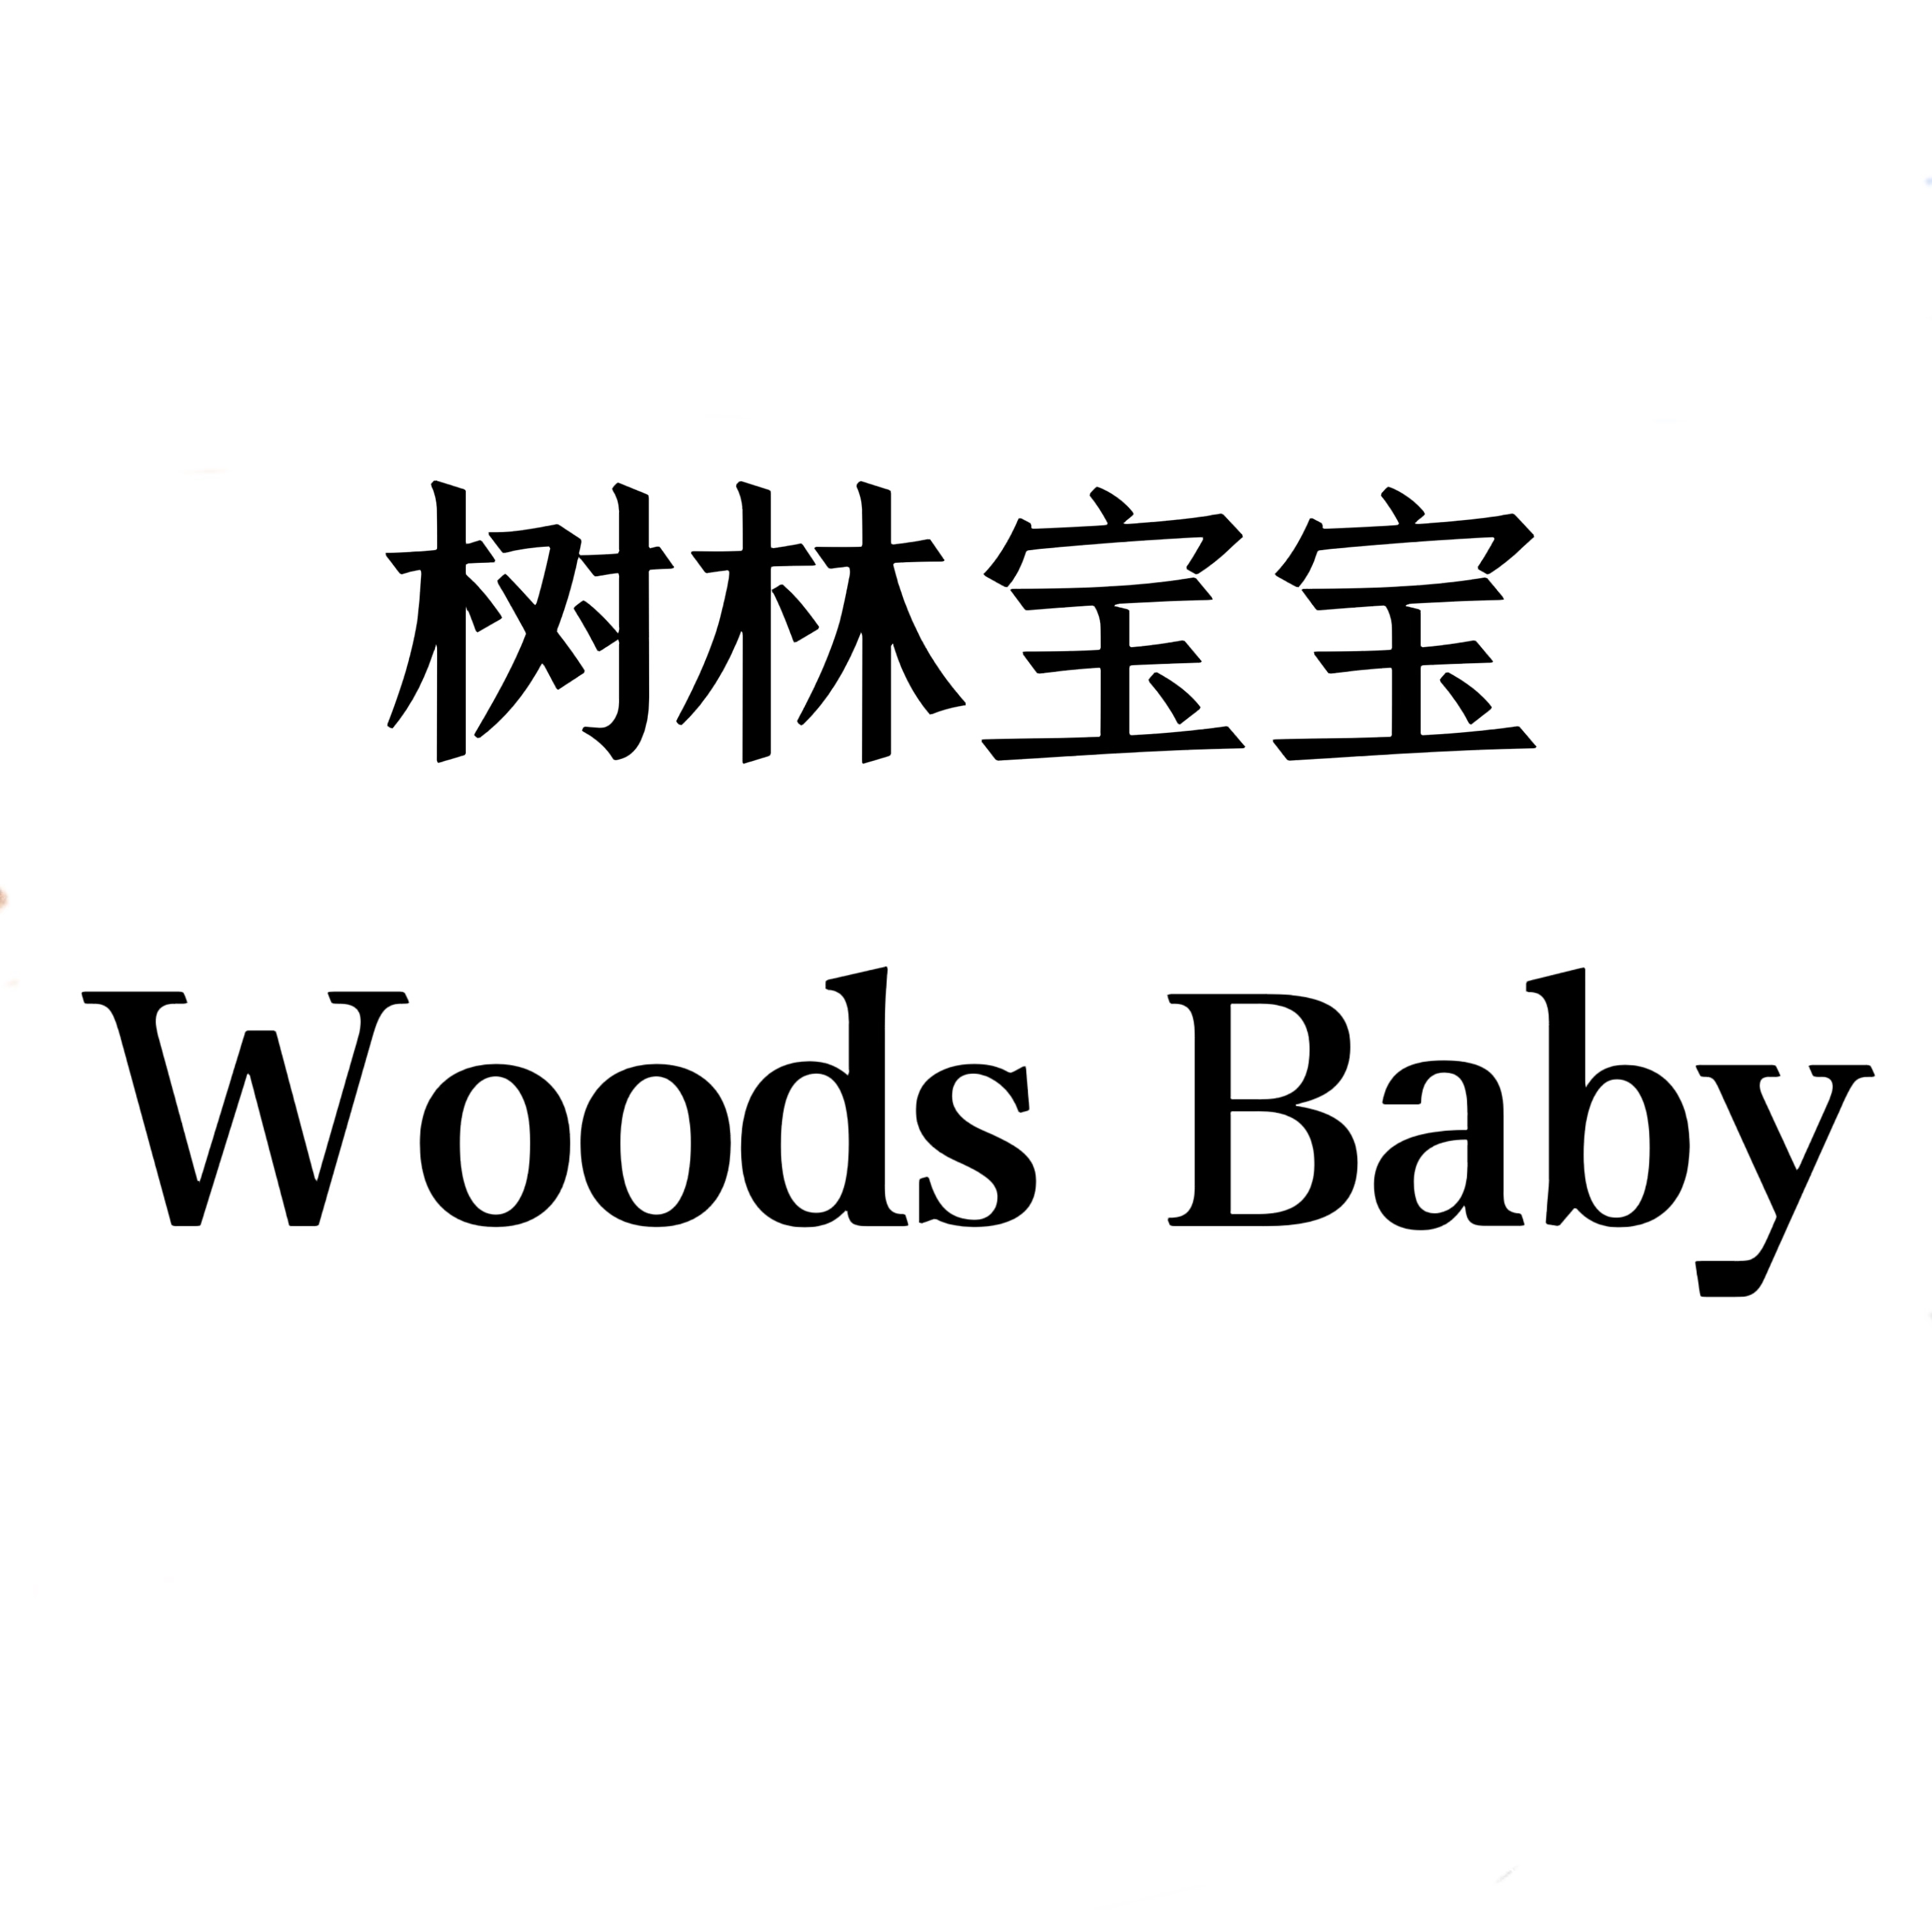 Woods Baby